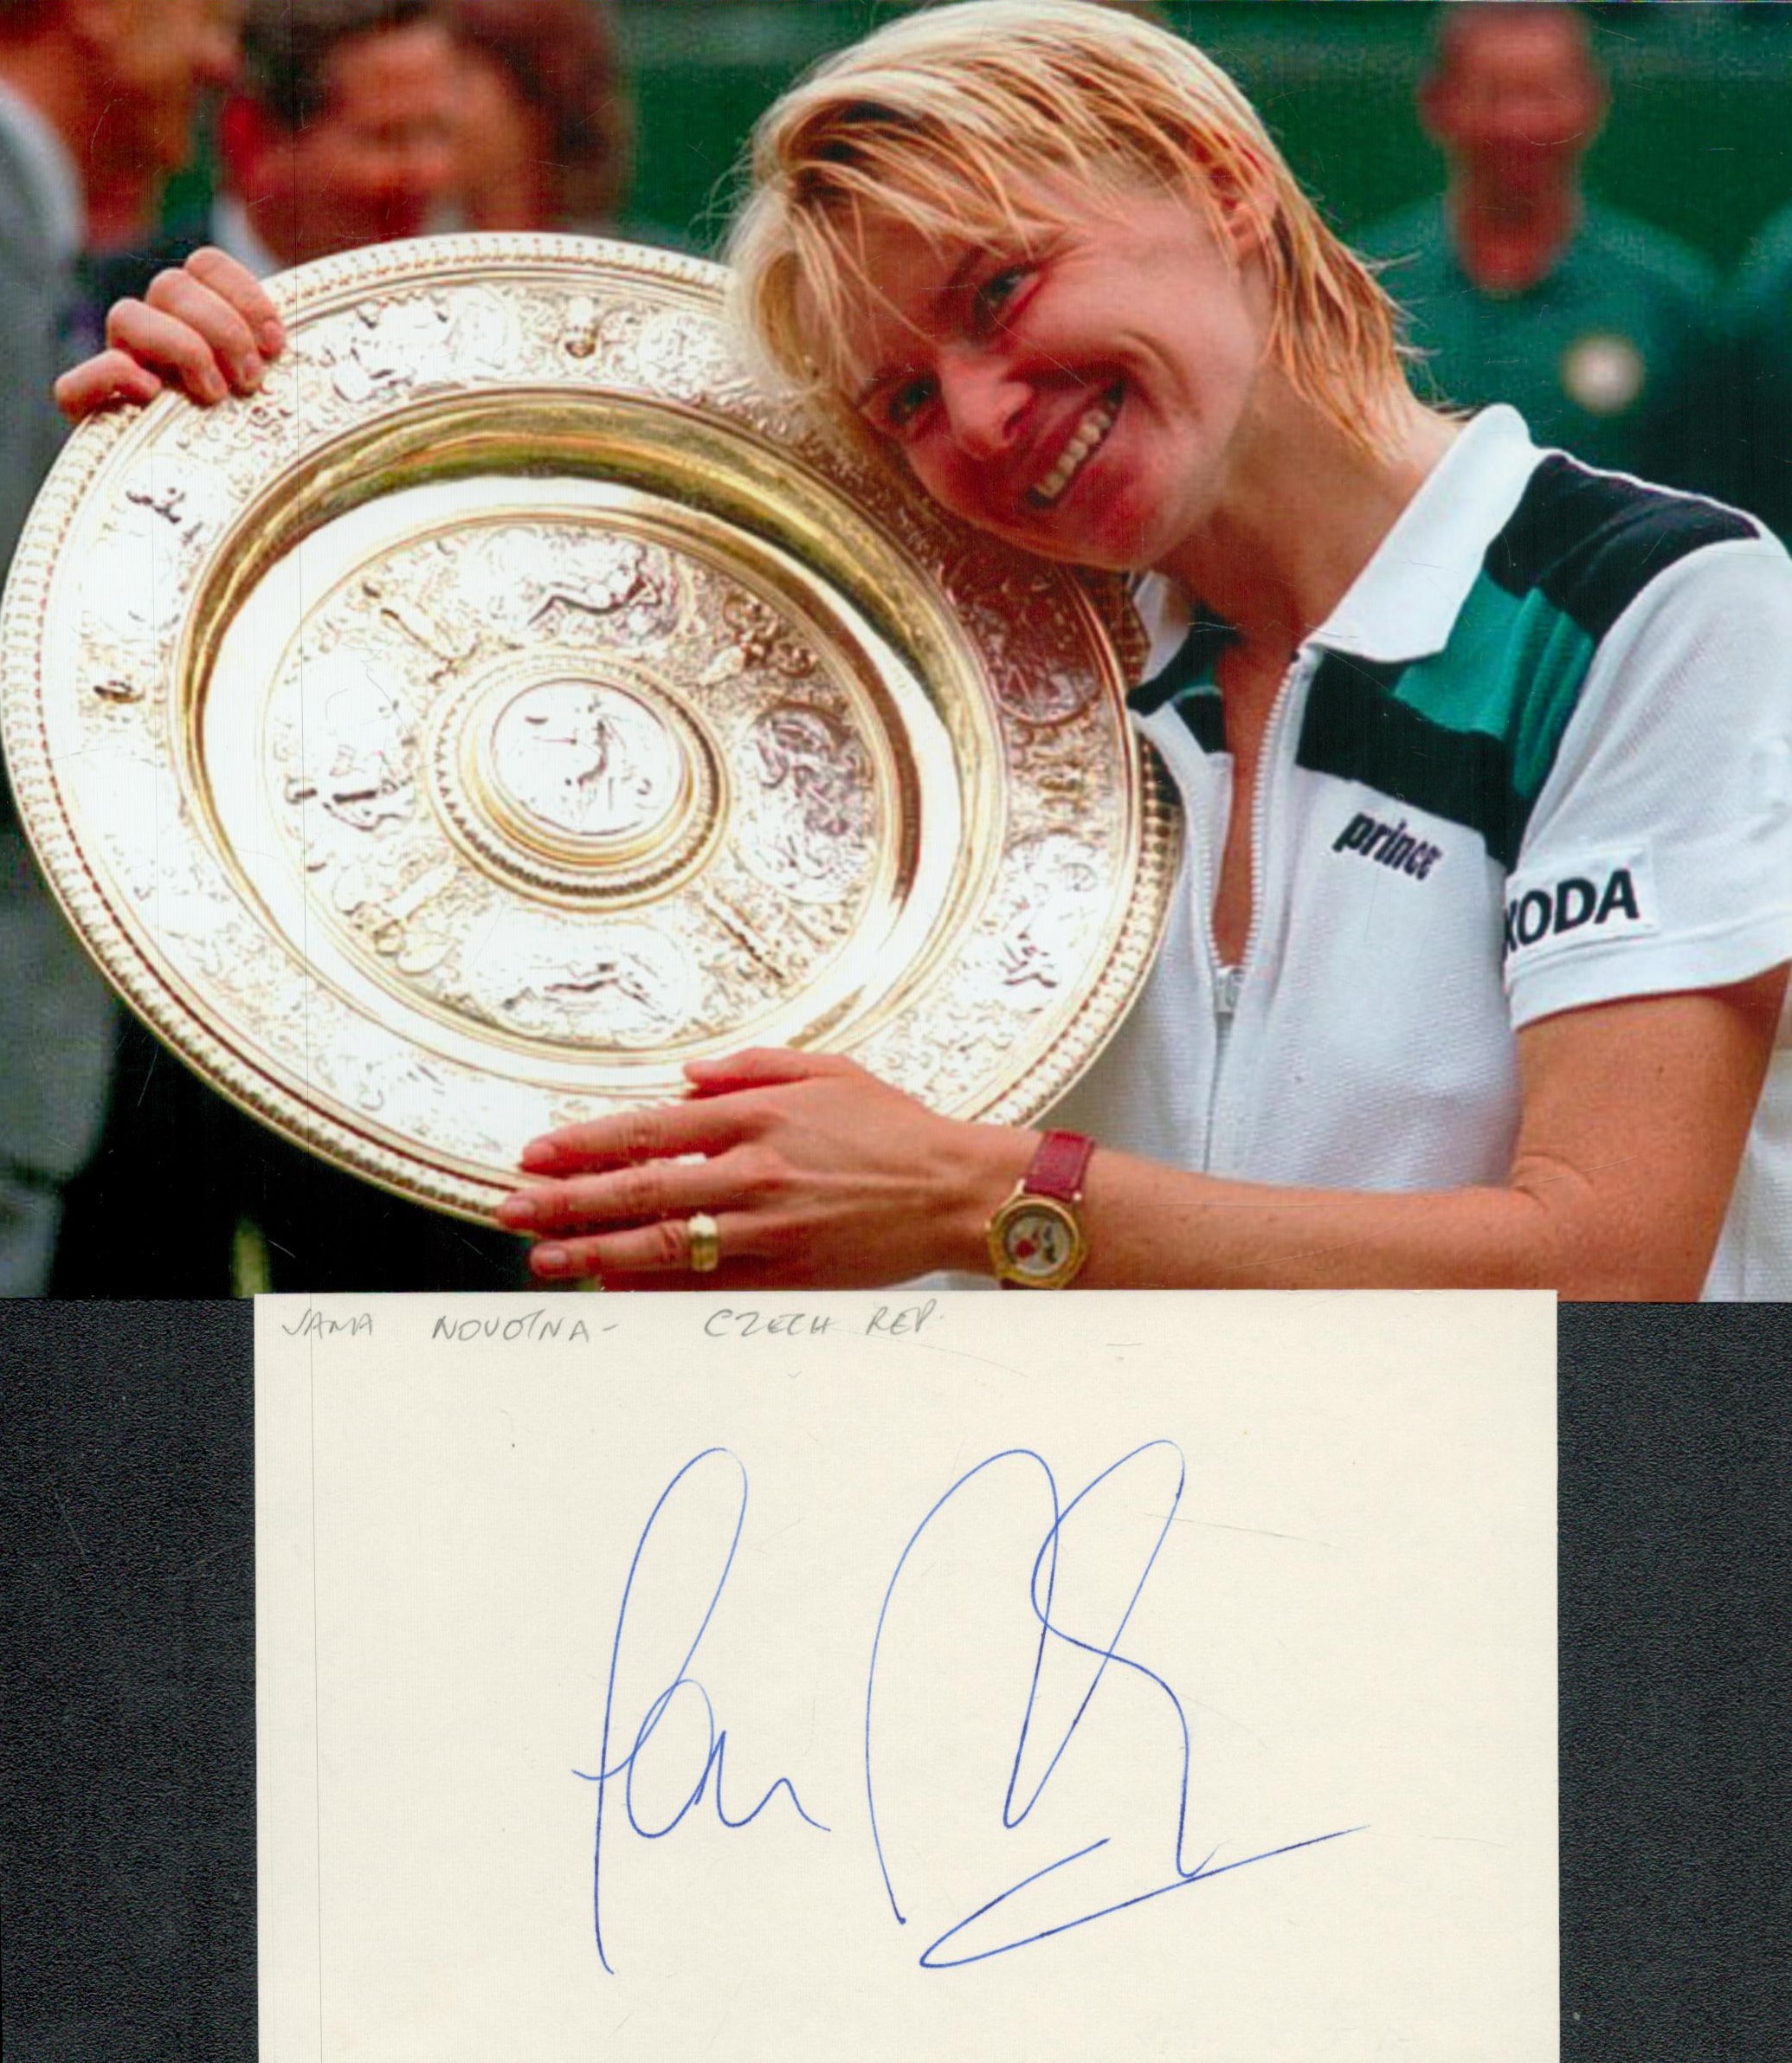 JANA NOVOTNA 1968-2017 Wimbledon 1998 Open Winner signed card with Tennis Photo. Good Condition. All